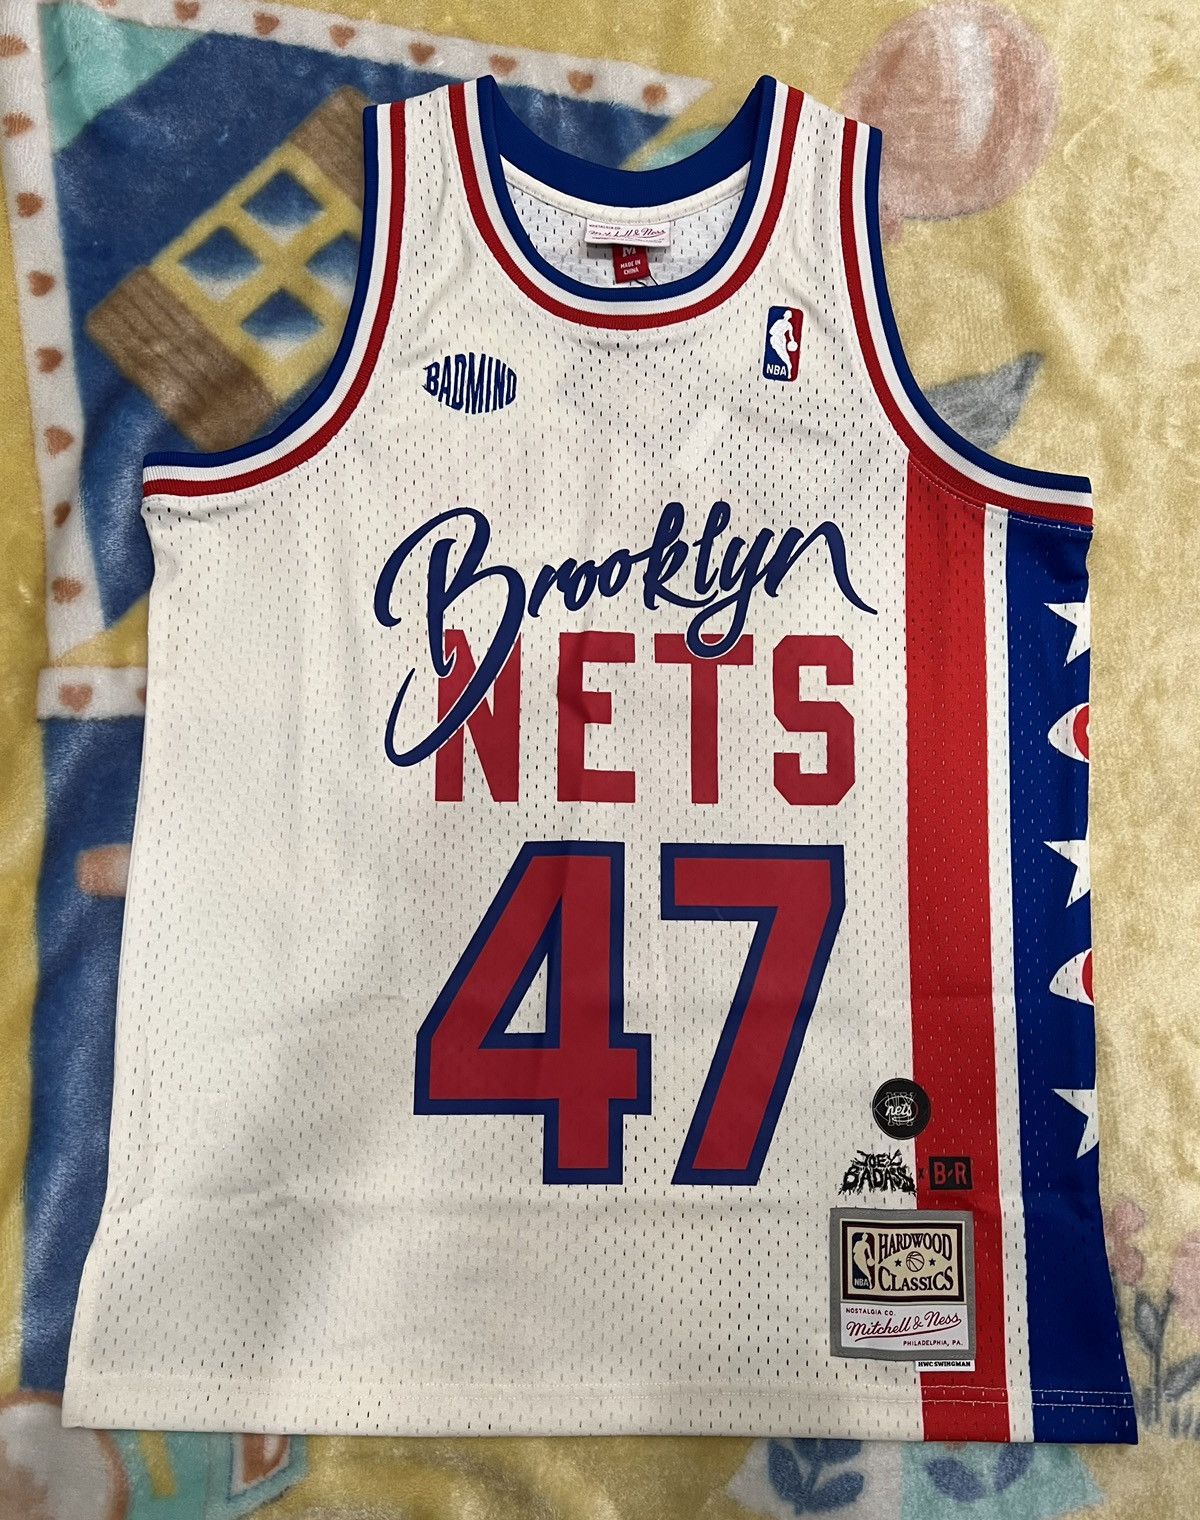 Mitchell & Ness Joey Bada$$ x Brooklyn Nets Swingman Jersey White